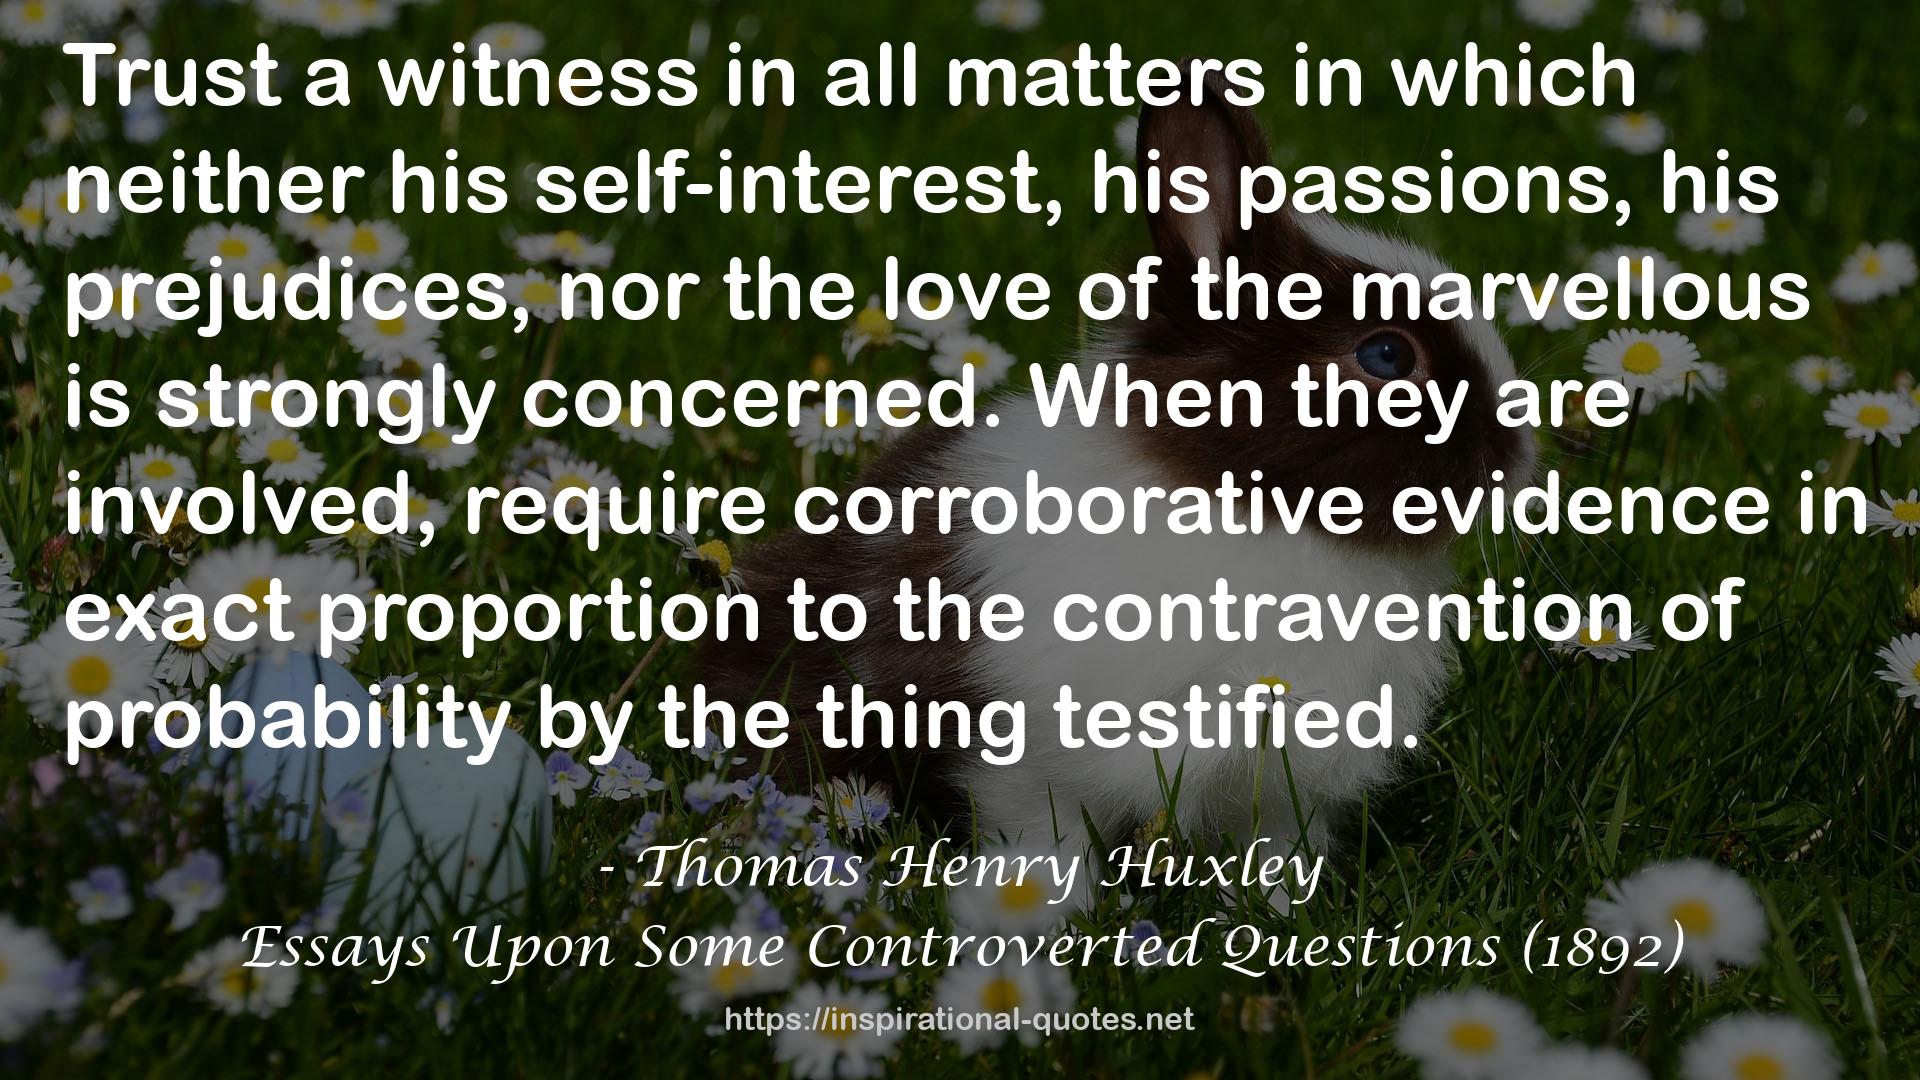 Thomas Henry Huxley QUOTES